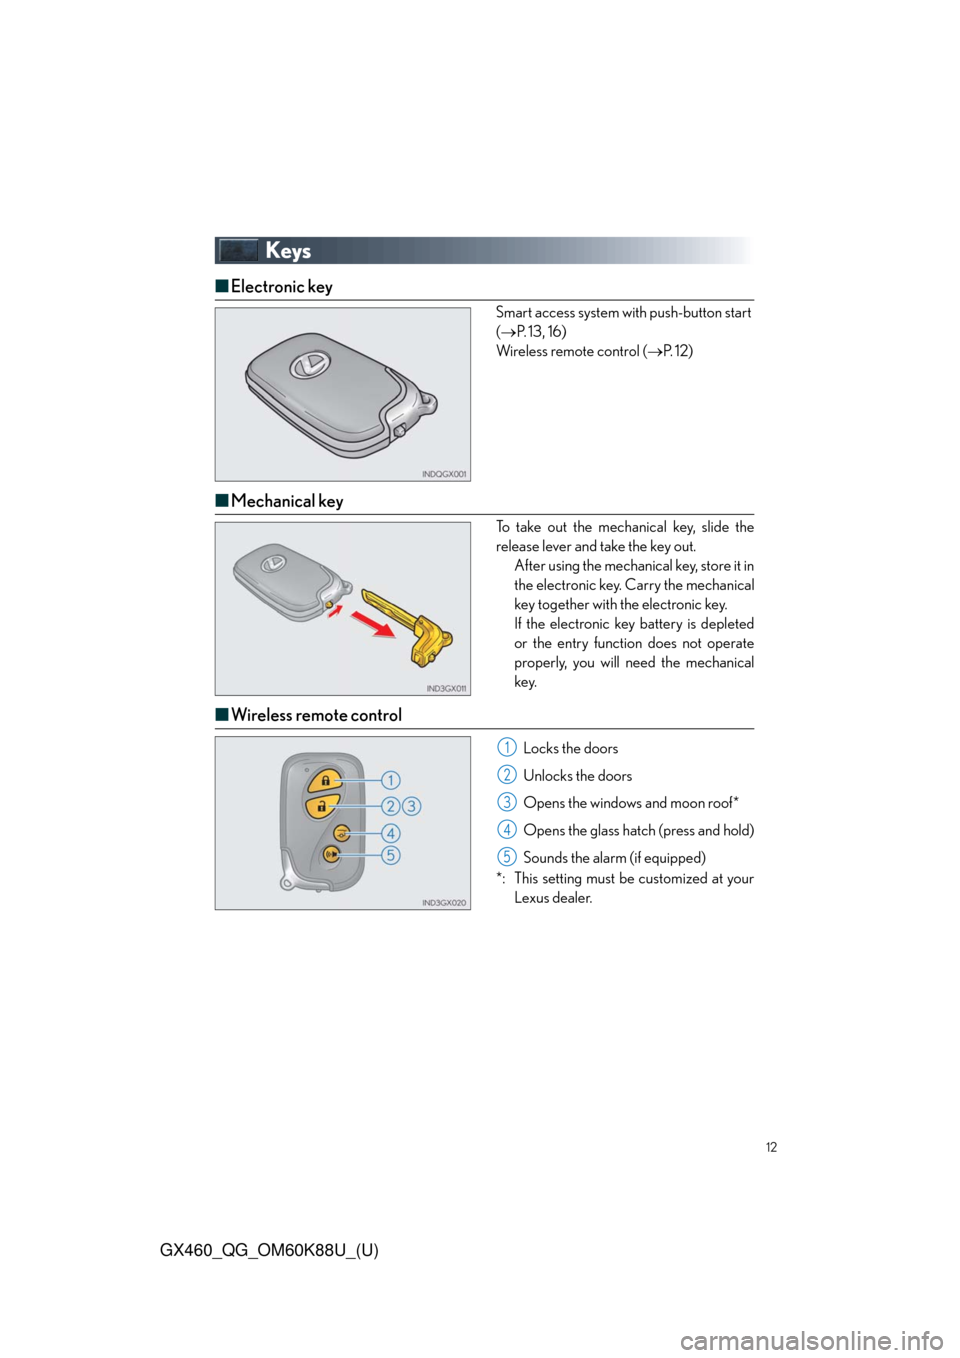 Lexus GX460 2014  REAR SEAT ENTERTAINMENT SYSTEM OPERATION / LEXUS 2014 GX460 QUICK GUIDE  (OM60K88U) User Guide 12
GX460_QG_OM60K88U_(U)
Keys
■Electronic key
Smart access system with push-button start 
(P. 13, 16)
Wireless remote control (P. 1 2 )
■Mechanical key
To take out the mechanical key, slide 